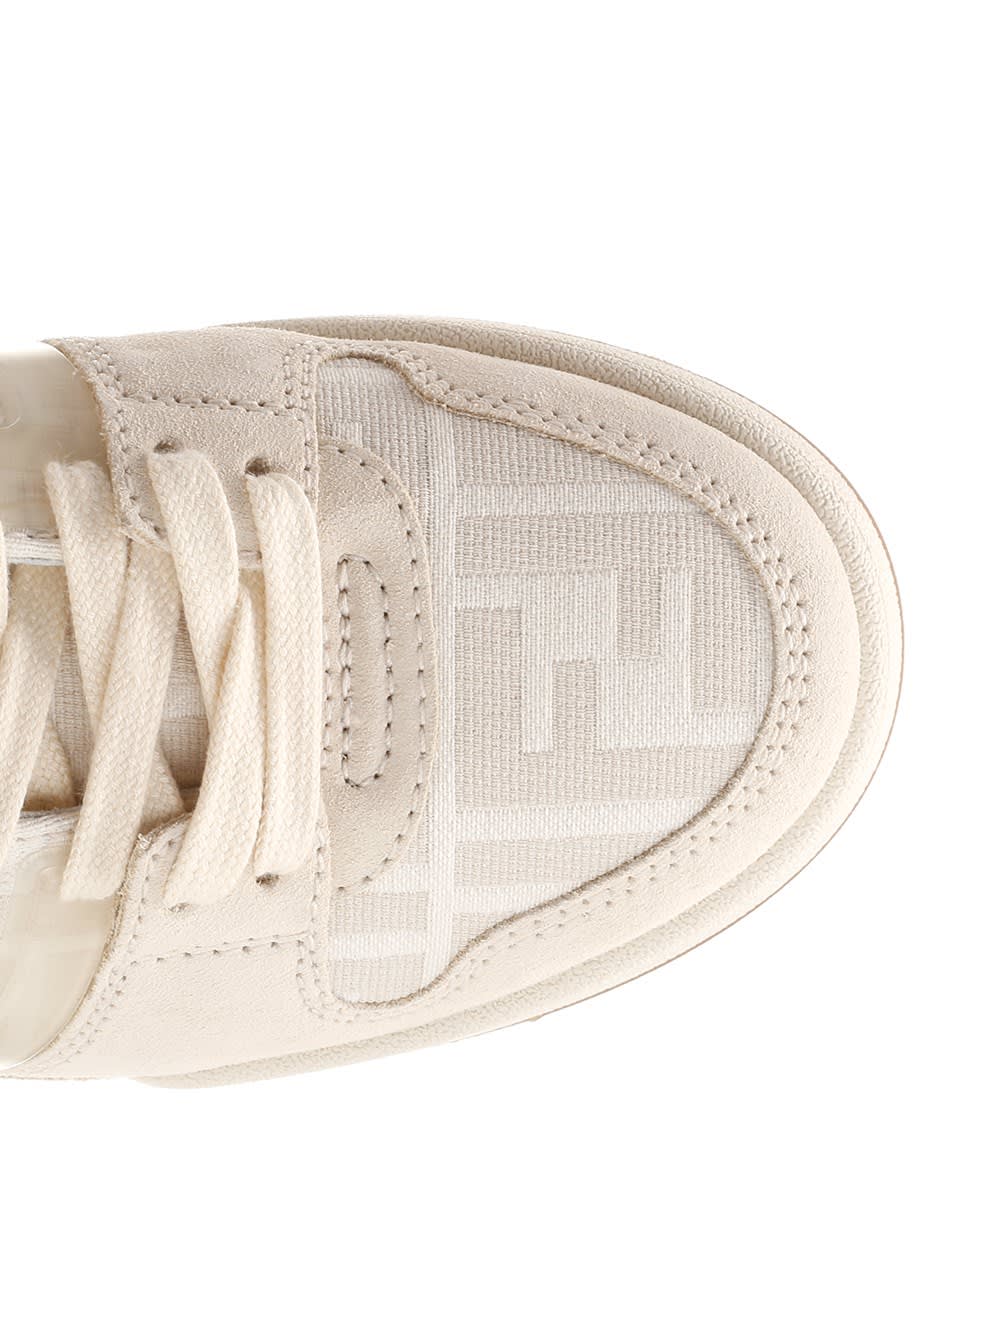 Shop Fendi Match Sneakers In Bianco